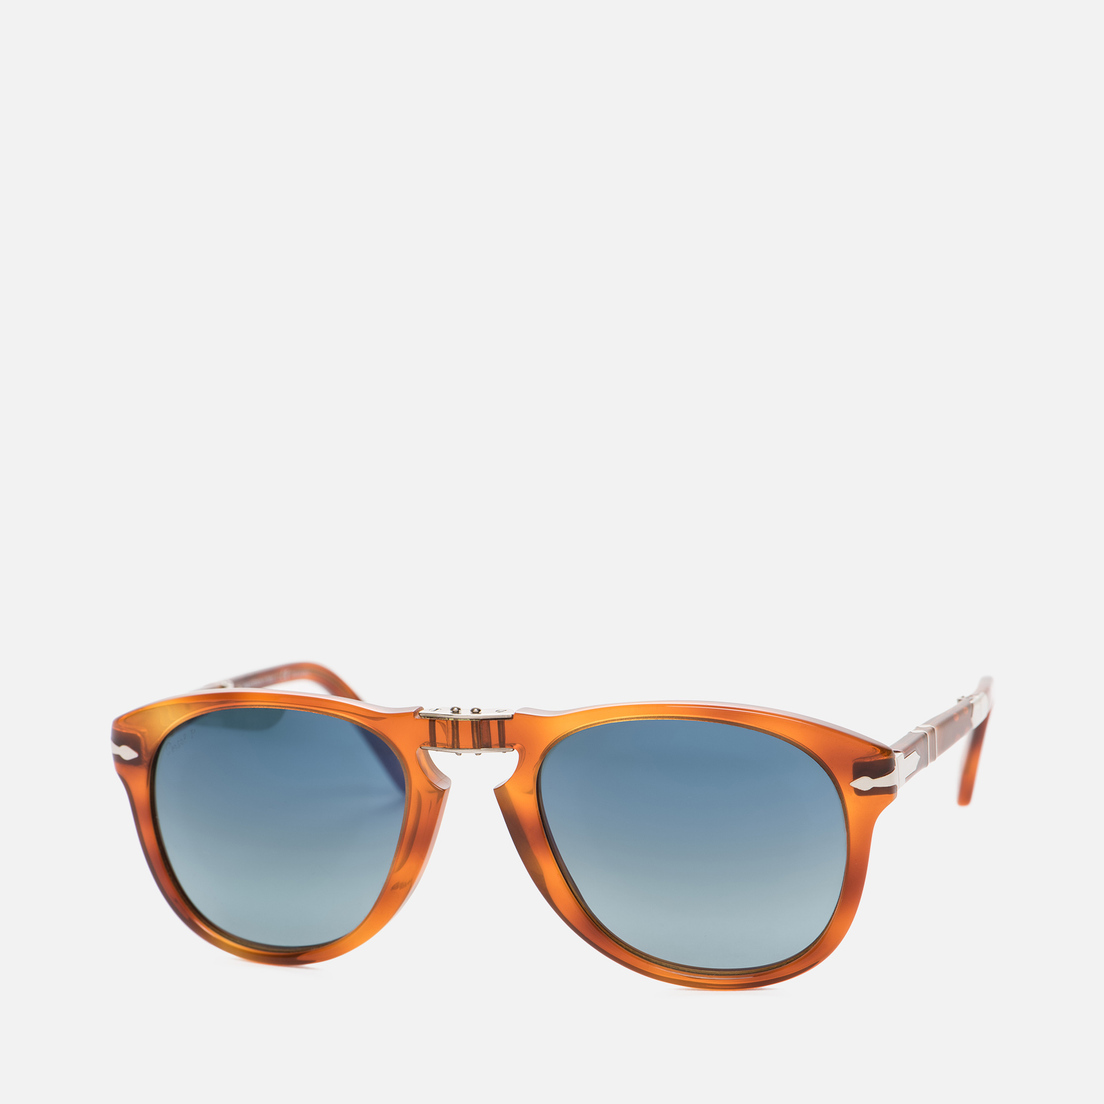 Persol Солнцезащитные очки Steve McQueen Light Polarized